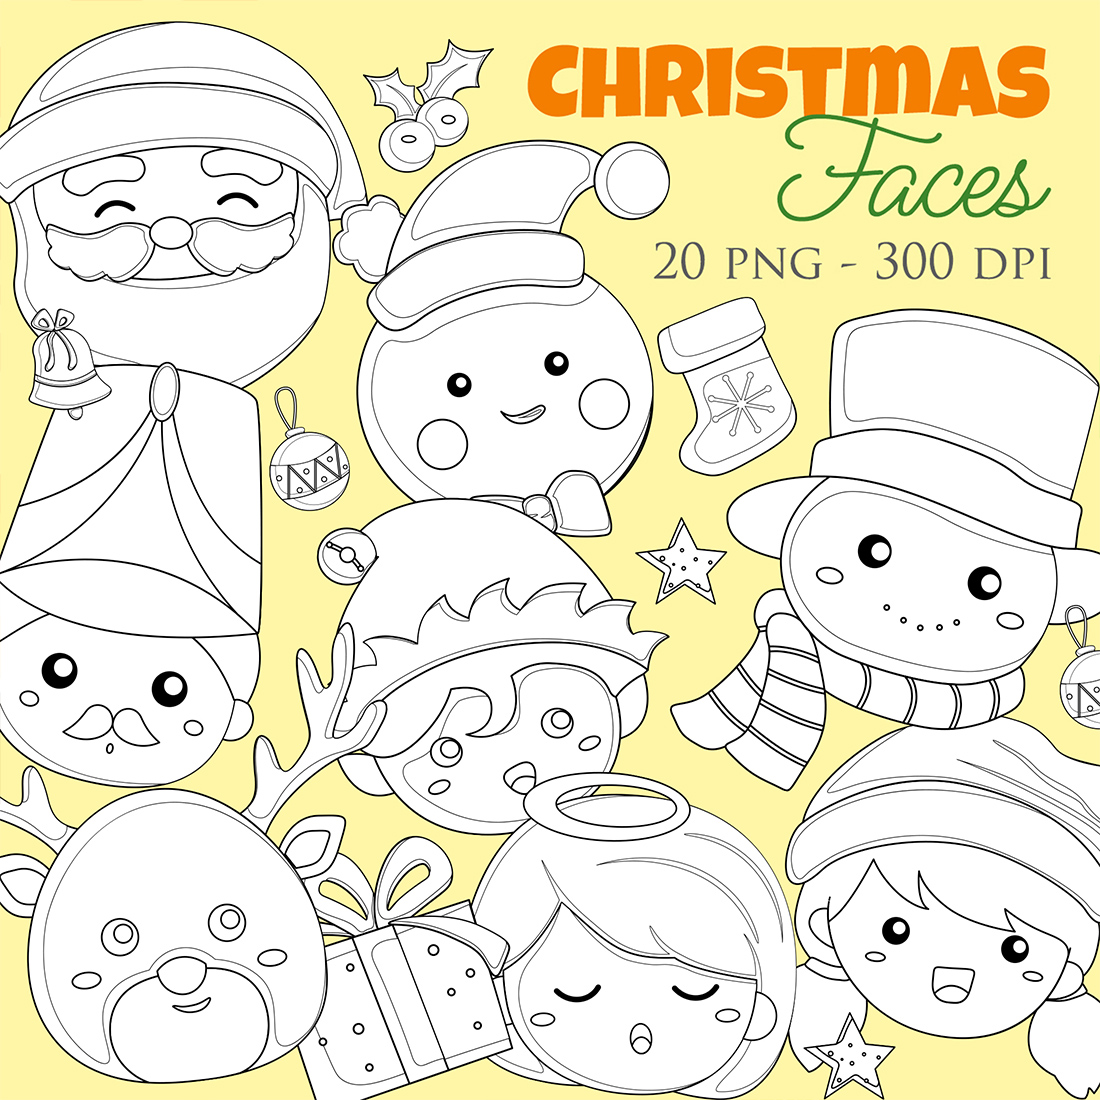 Cute Christmas Faces Elf Snowman Deer Animal Girl Kids Angel Cartoon Digital Stamp Outline Black and White cover image.